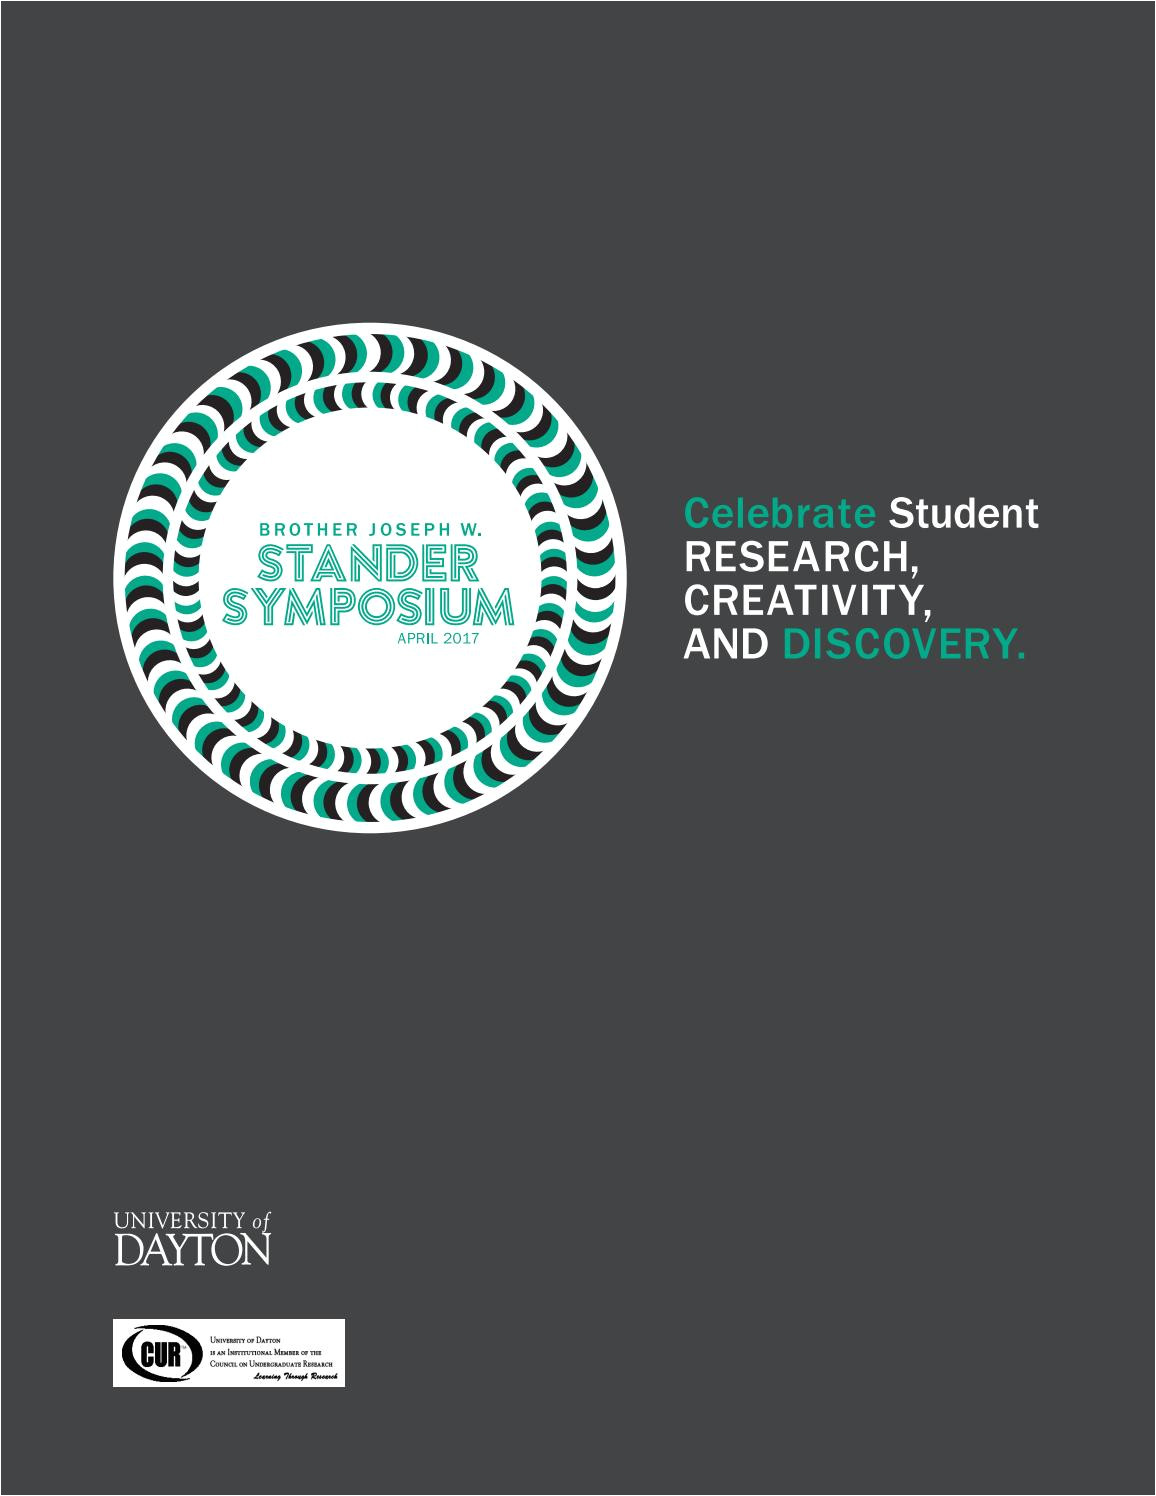 univ of dayton stander symposium 2017 abstract book by university of dayton stander symposium issuu